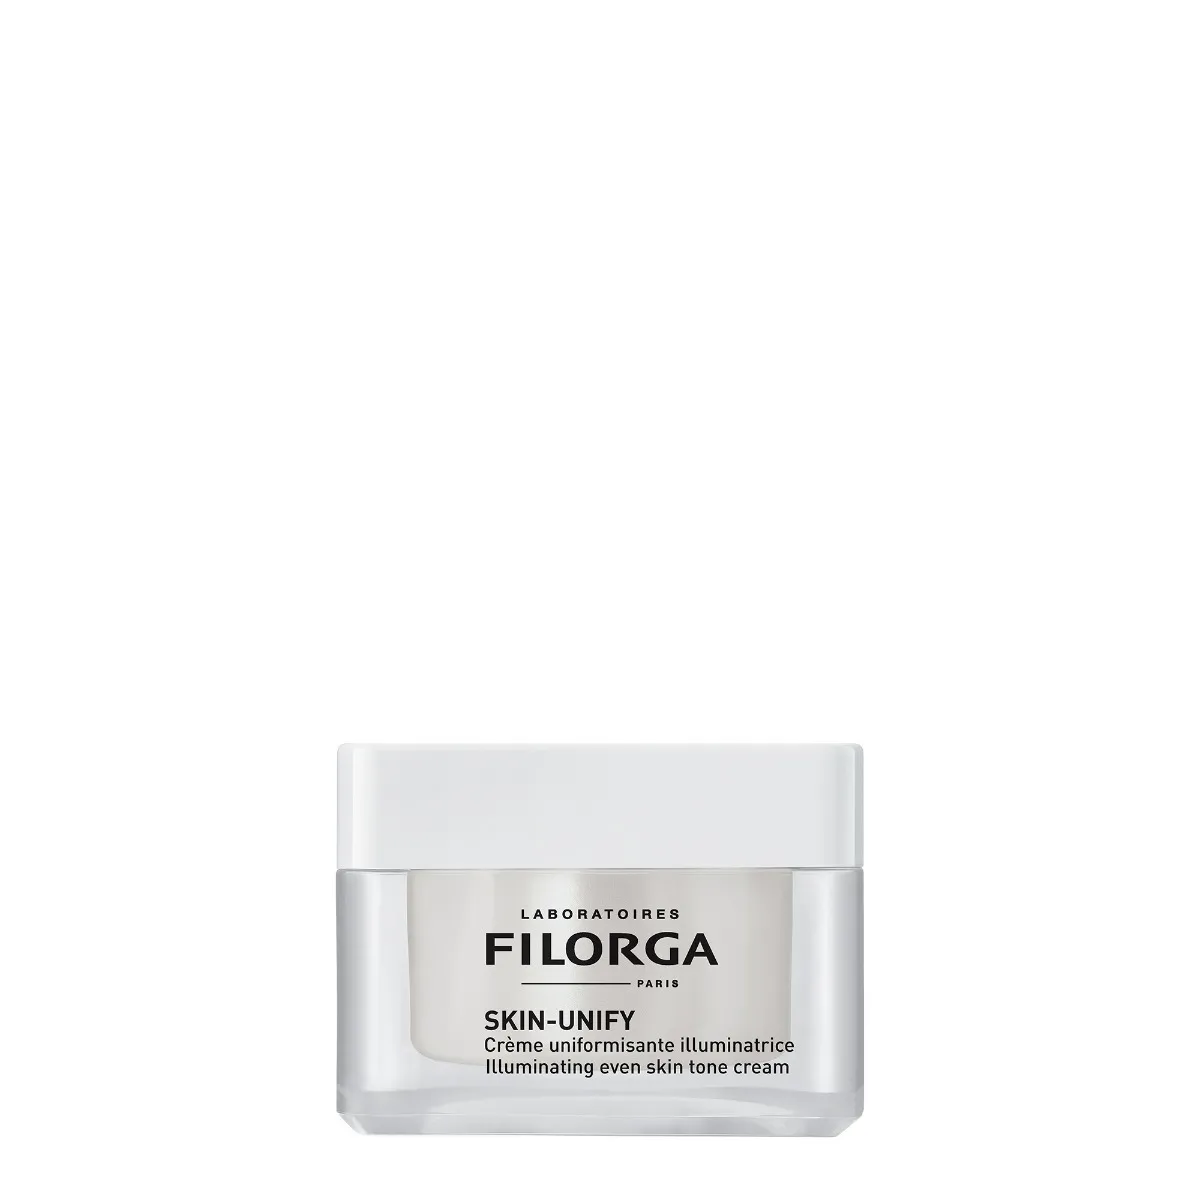 Filorga Skin-Unify 50 ml Antimacchie, Uniformante, Illuminante